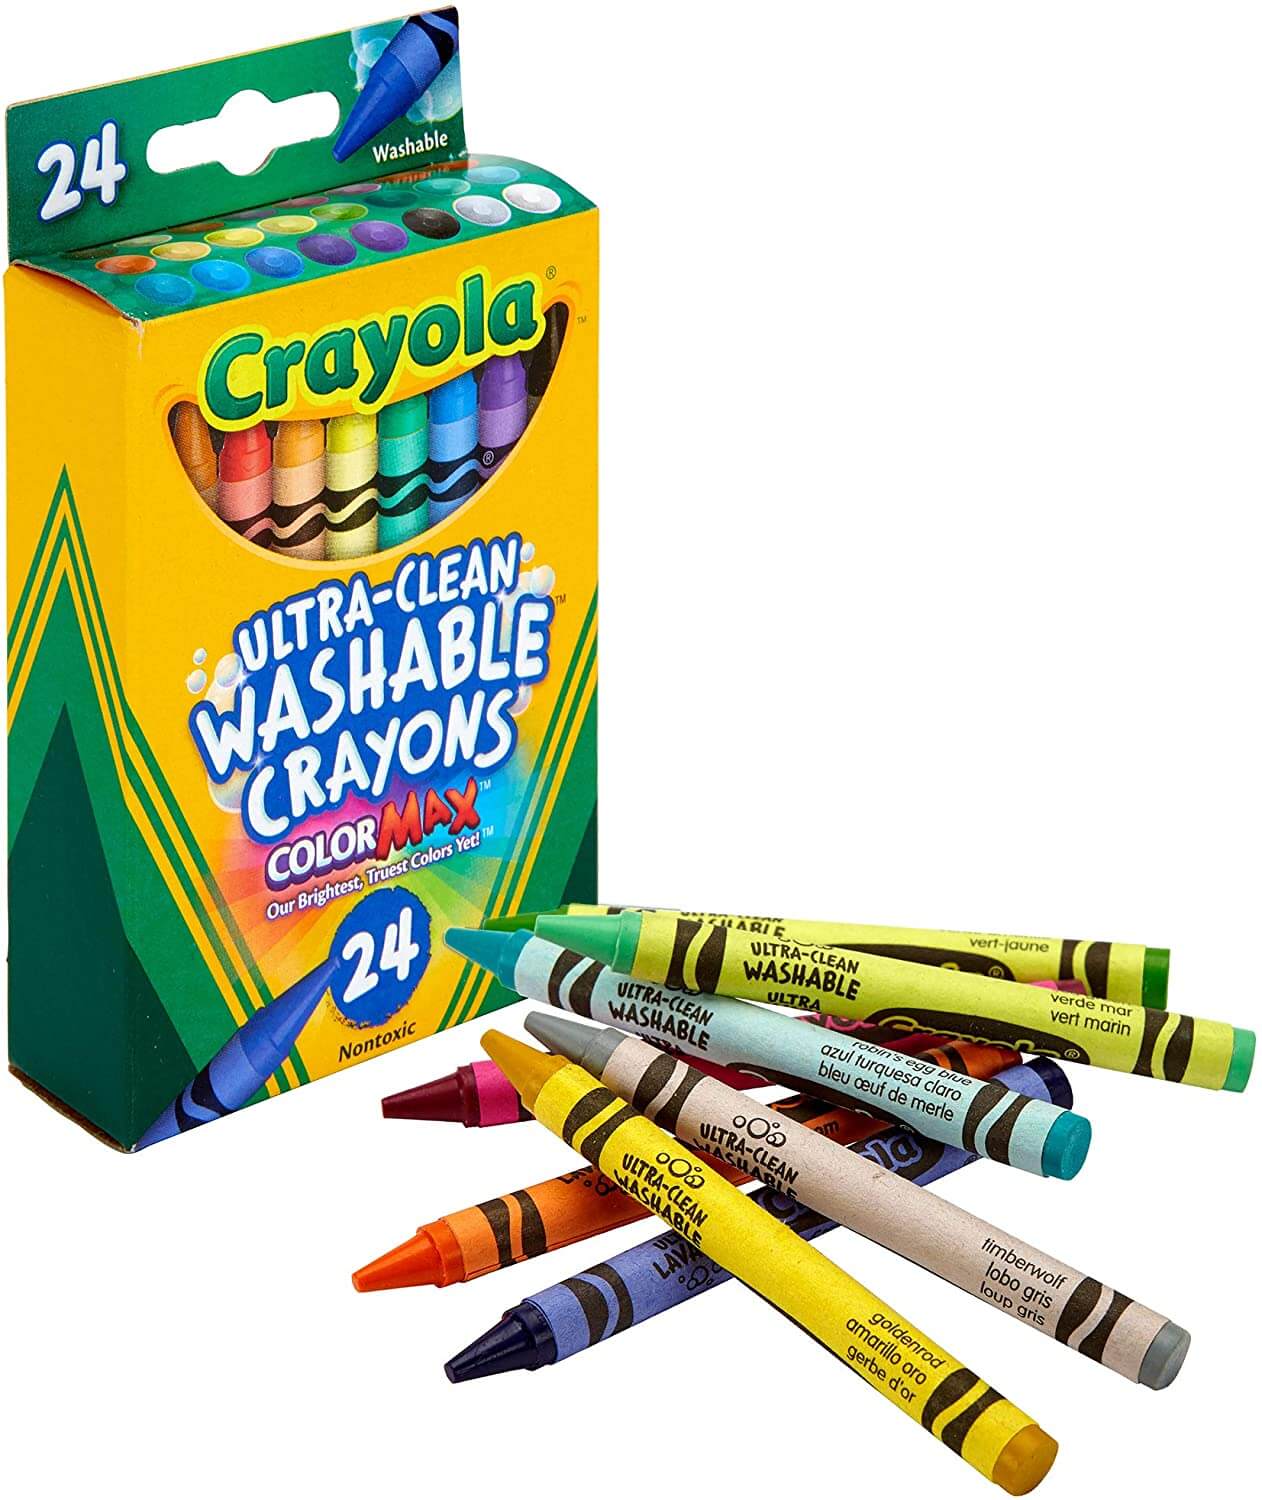 CRAYOLA Crayola Washable Crayons Pack Of 24